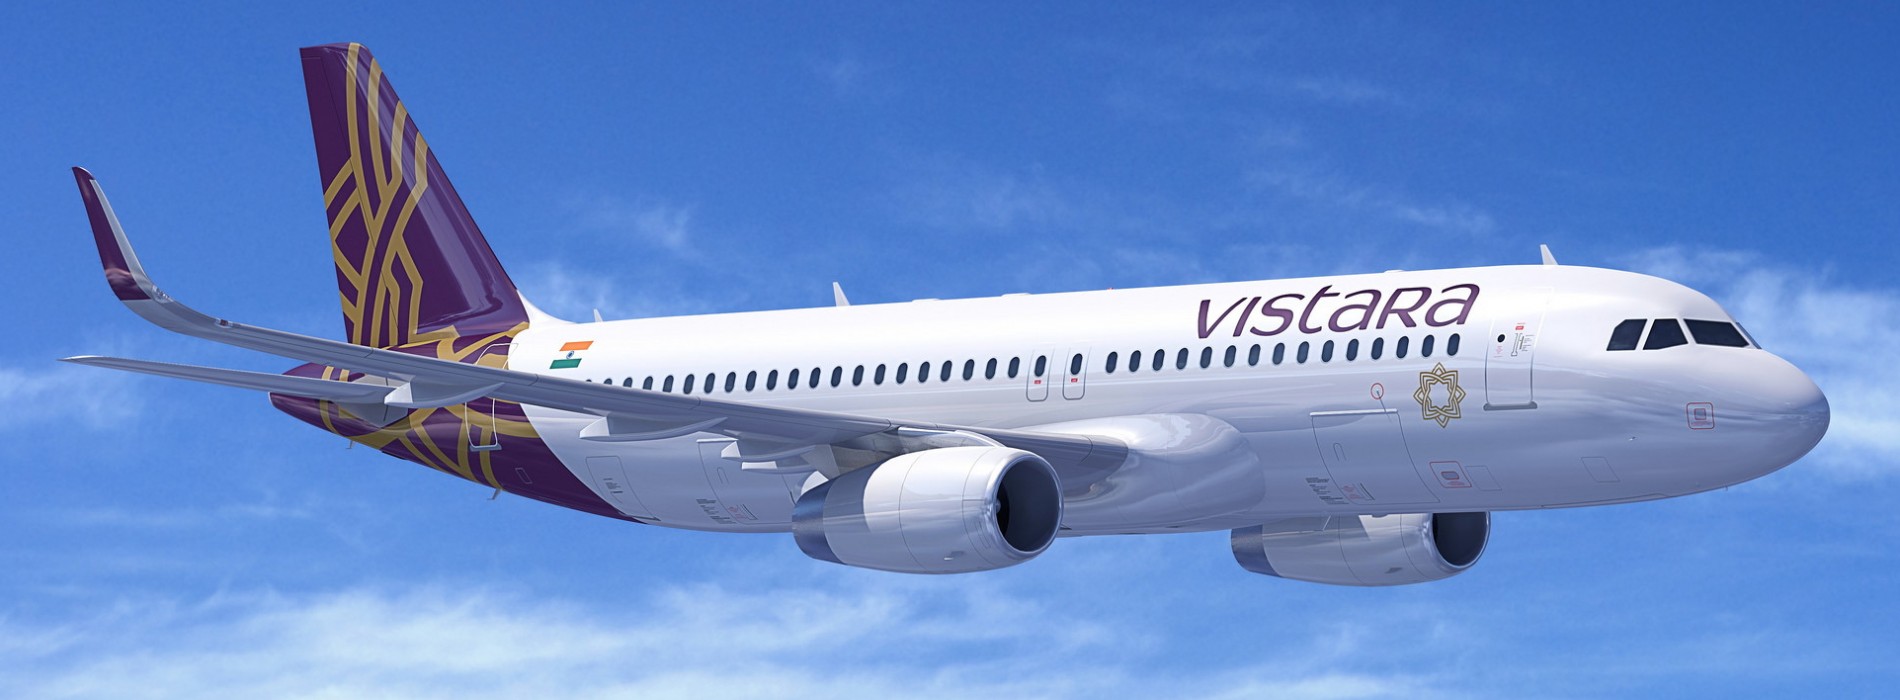 British Airways announces partnership with Vistara